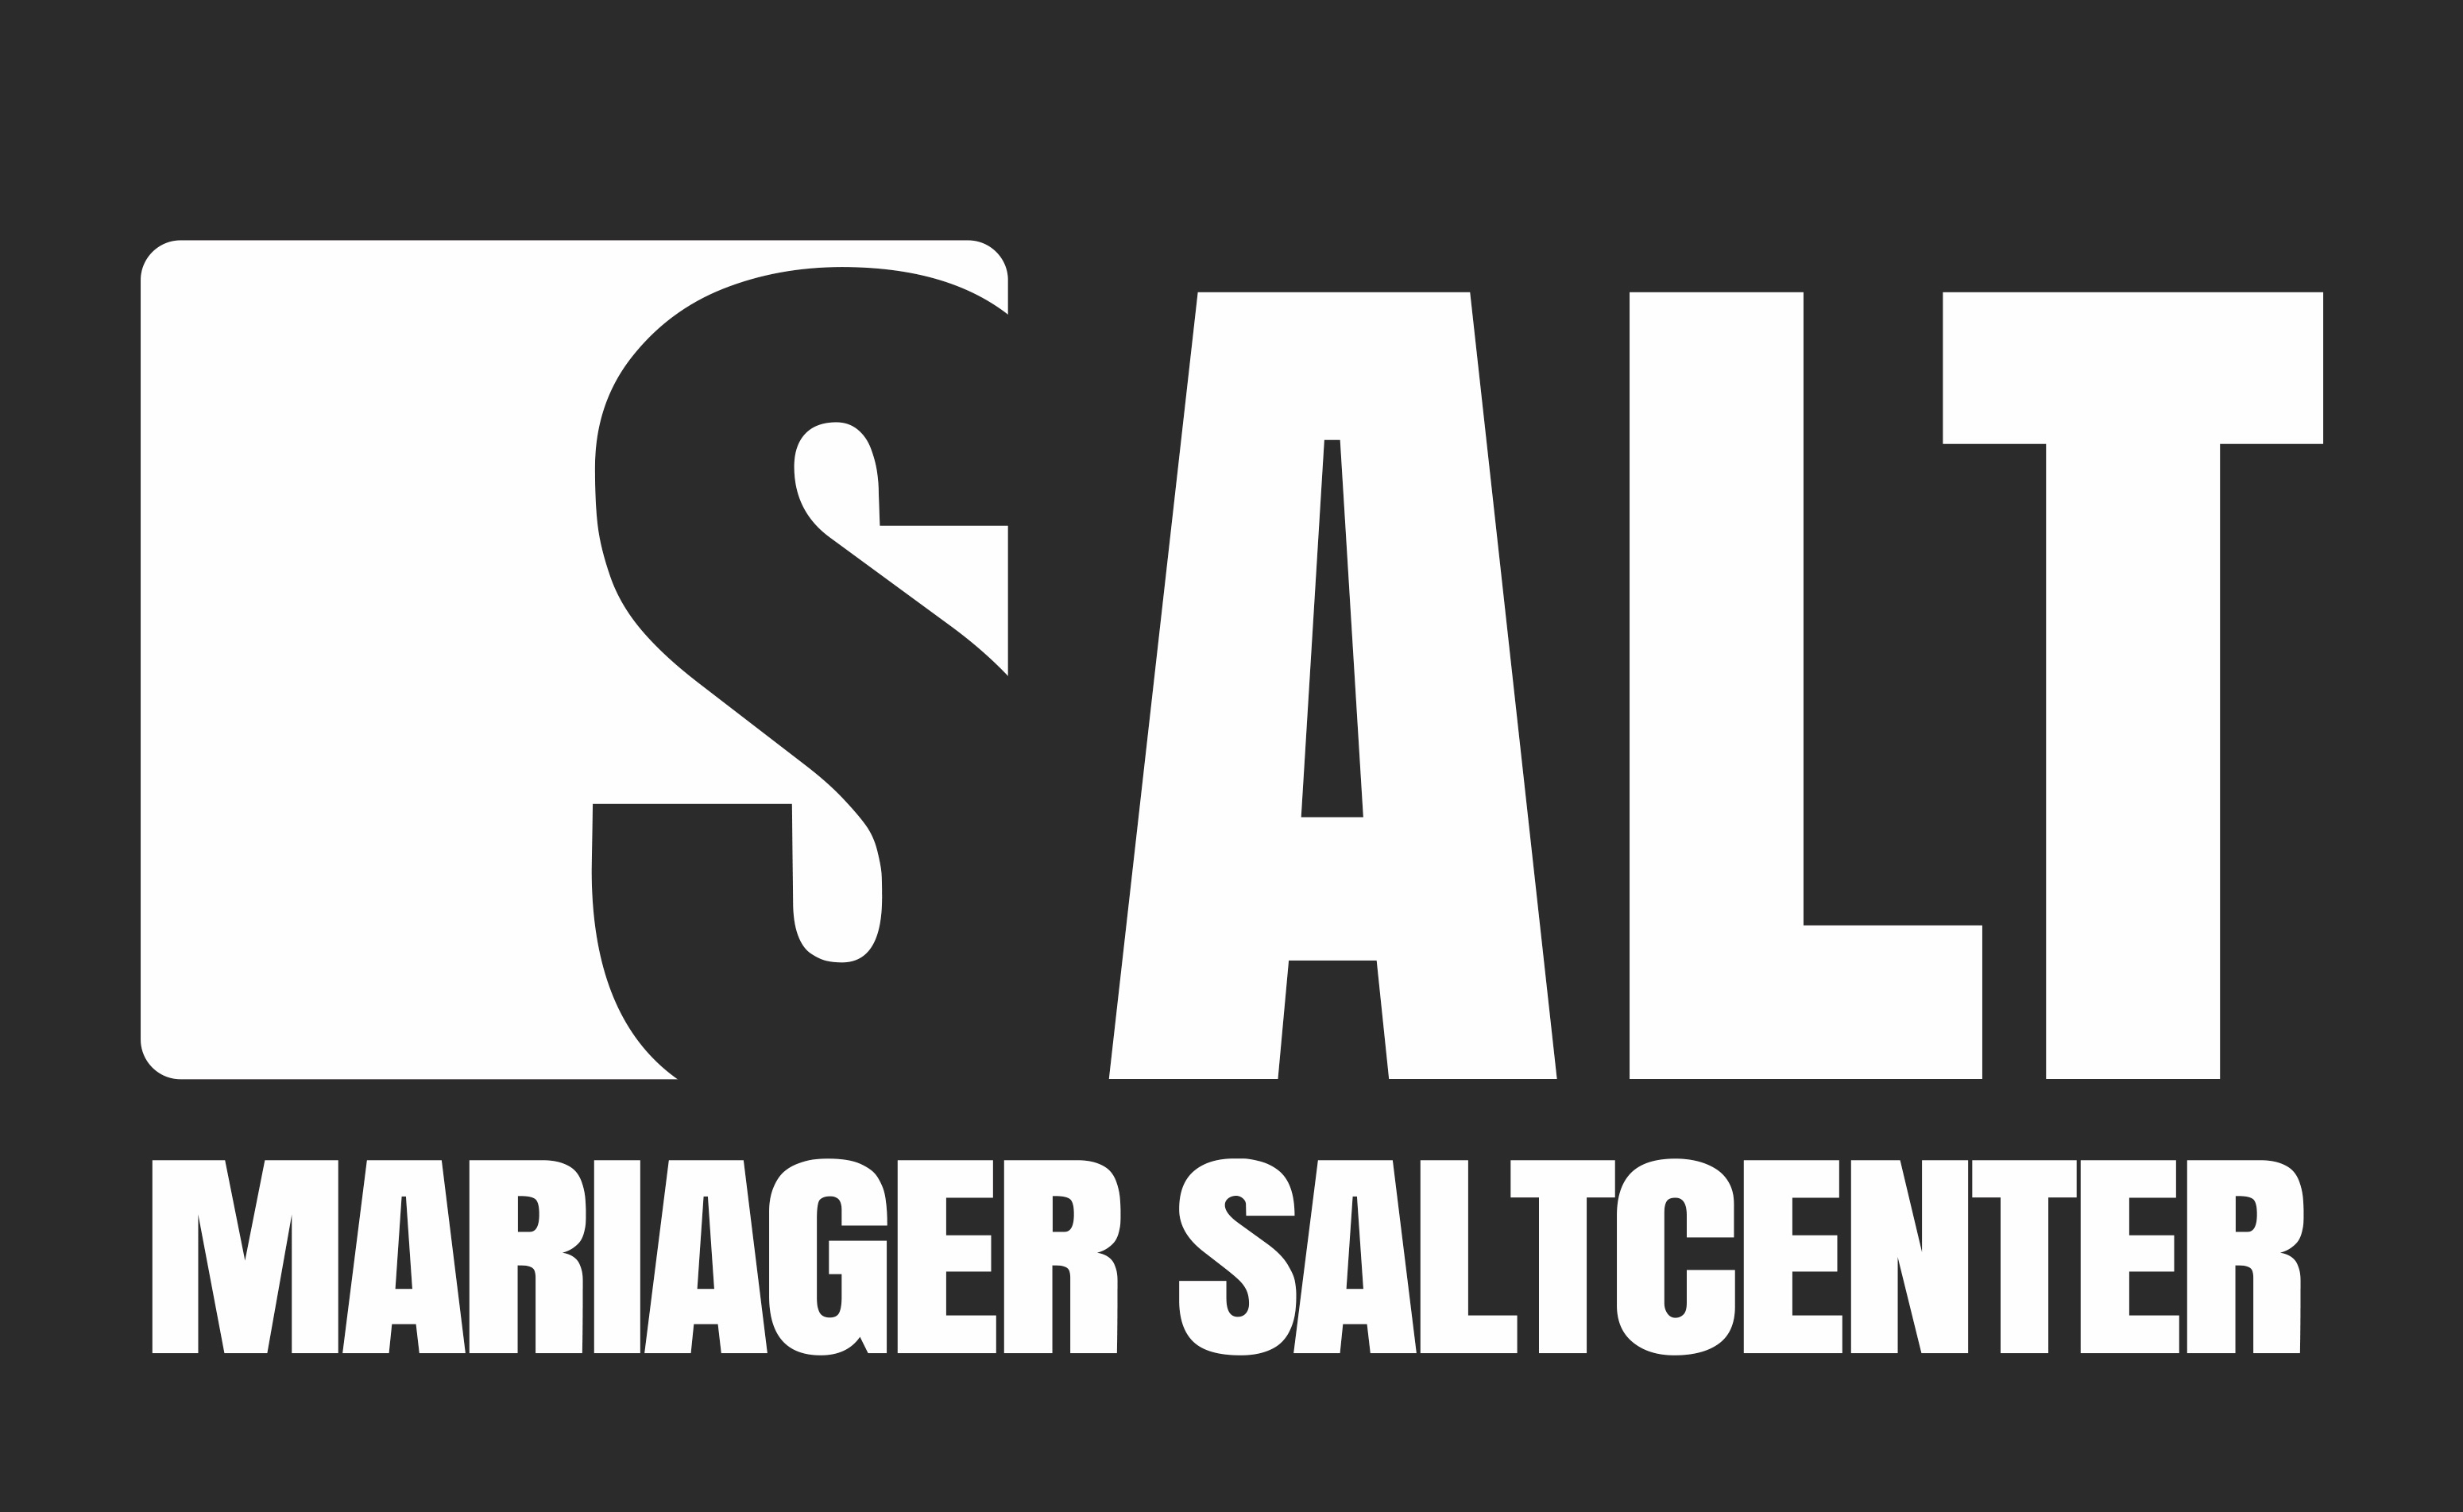 Mariager Saltcenter logo